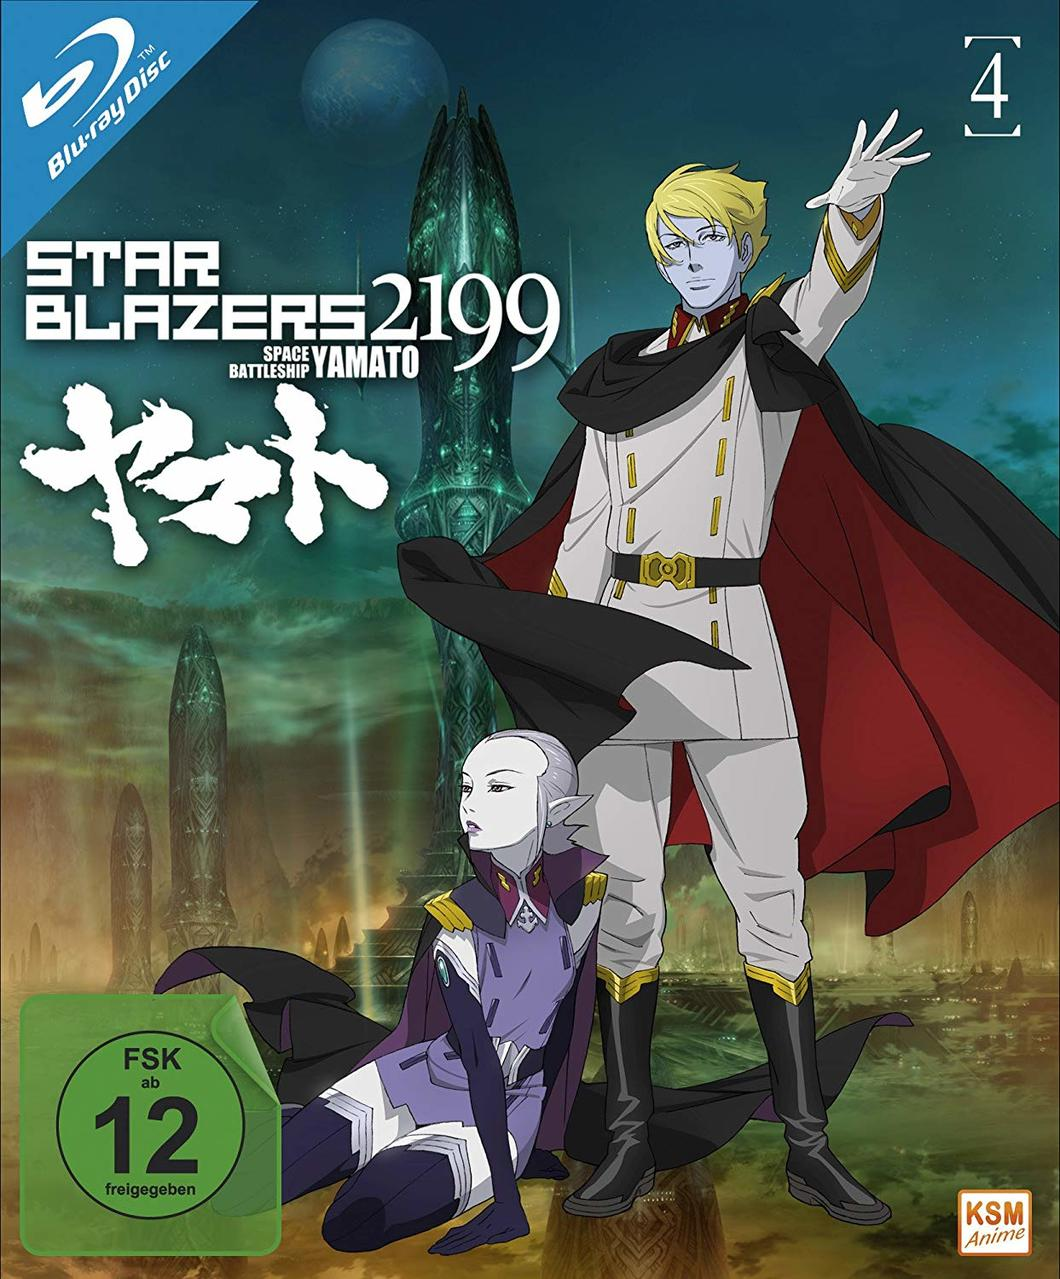 Star Blazers 4 Blu-ray Space Yamato Battleship 2199 - Vol. 